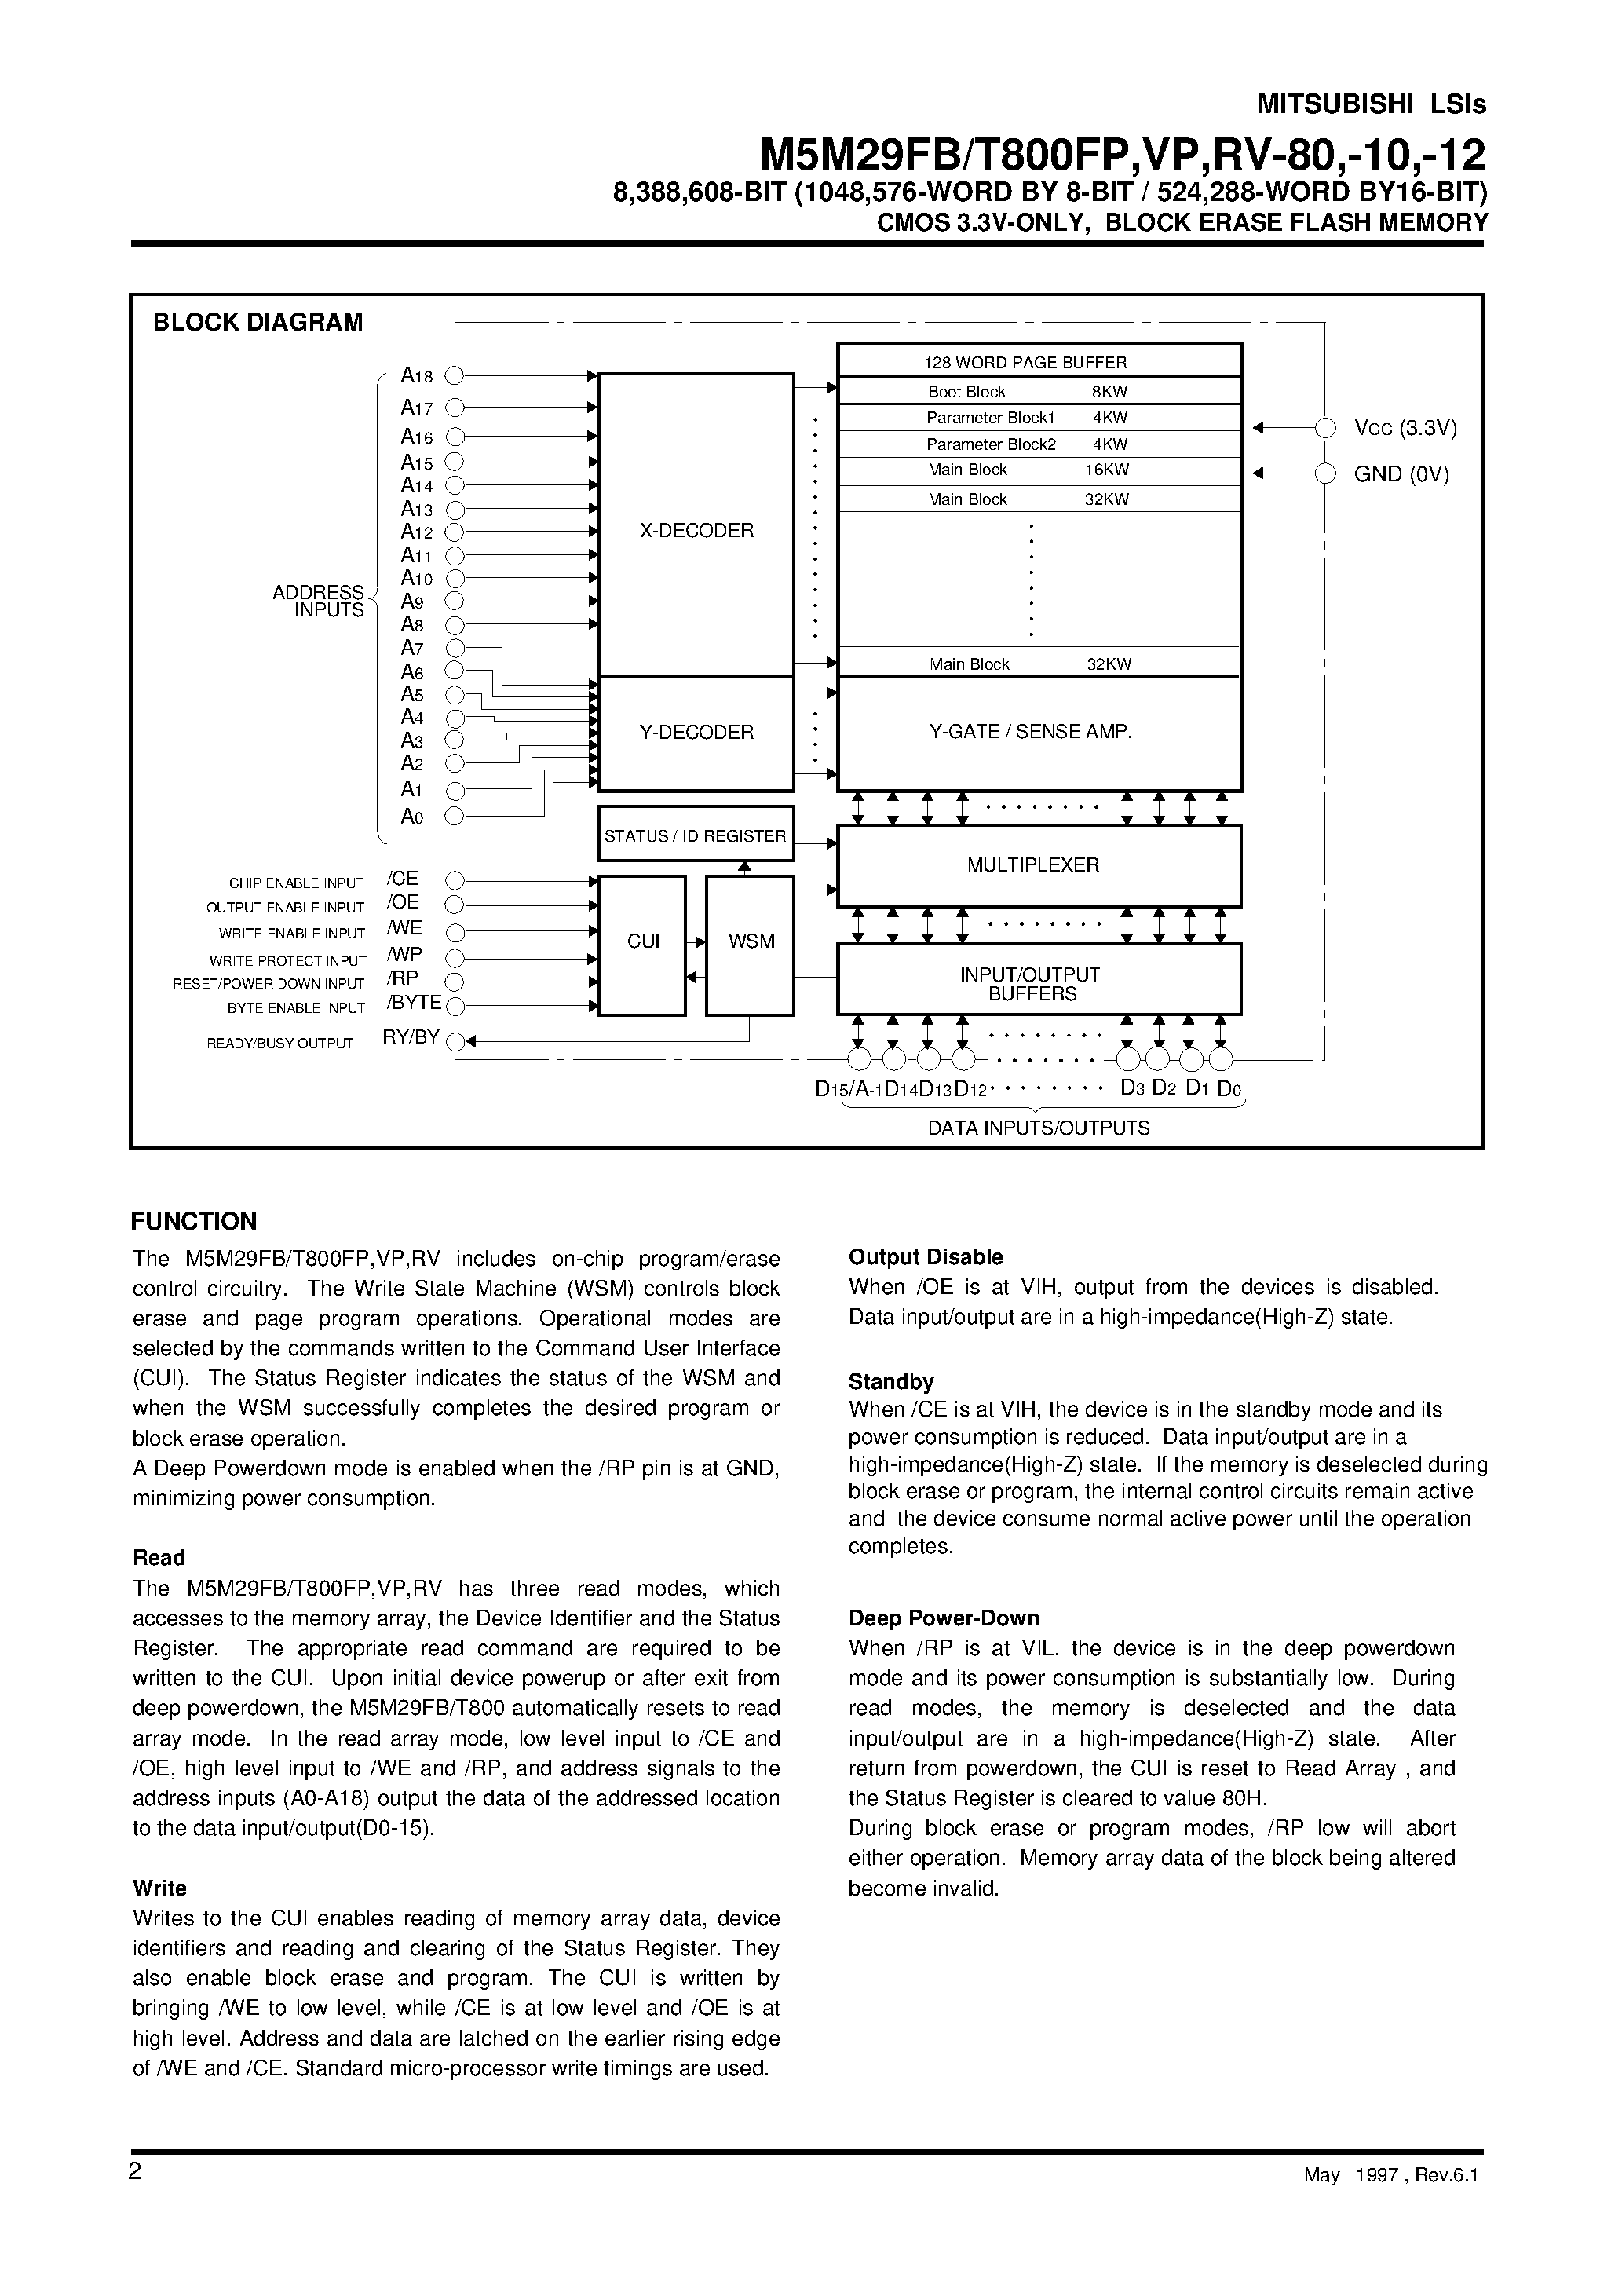 Datasheet M5M29FT800RV-12 - 8 /388 /608-BIT (1048 /576-576-WORD BY 8-BIT / 524 /288-WORD BY16-BIT)CMOS 3.3V-ONLY / BLOCK ERASE FLASH MEMORY page 2